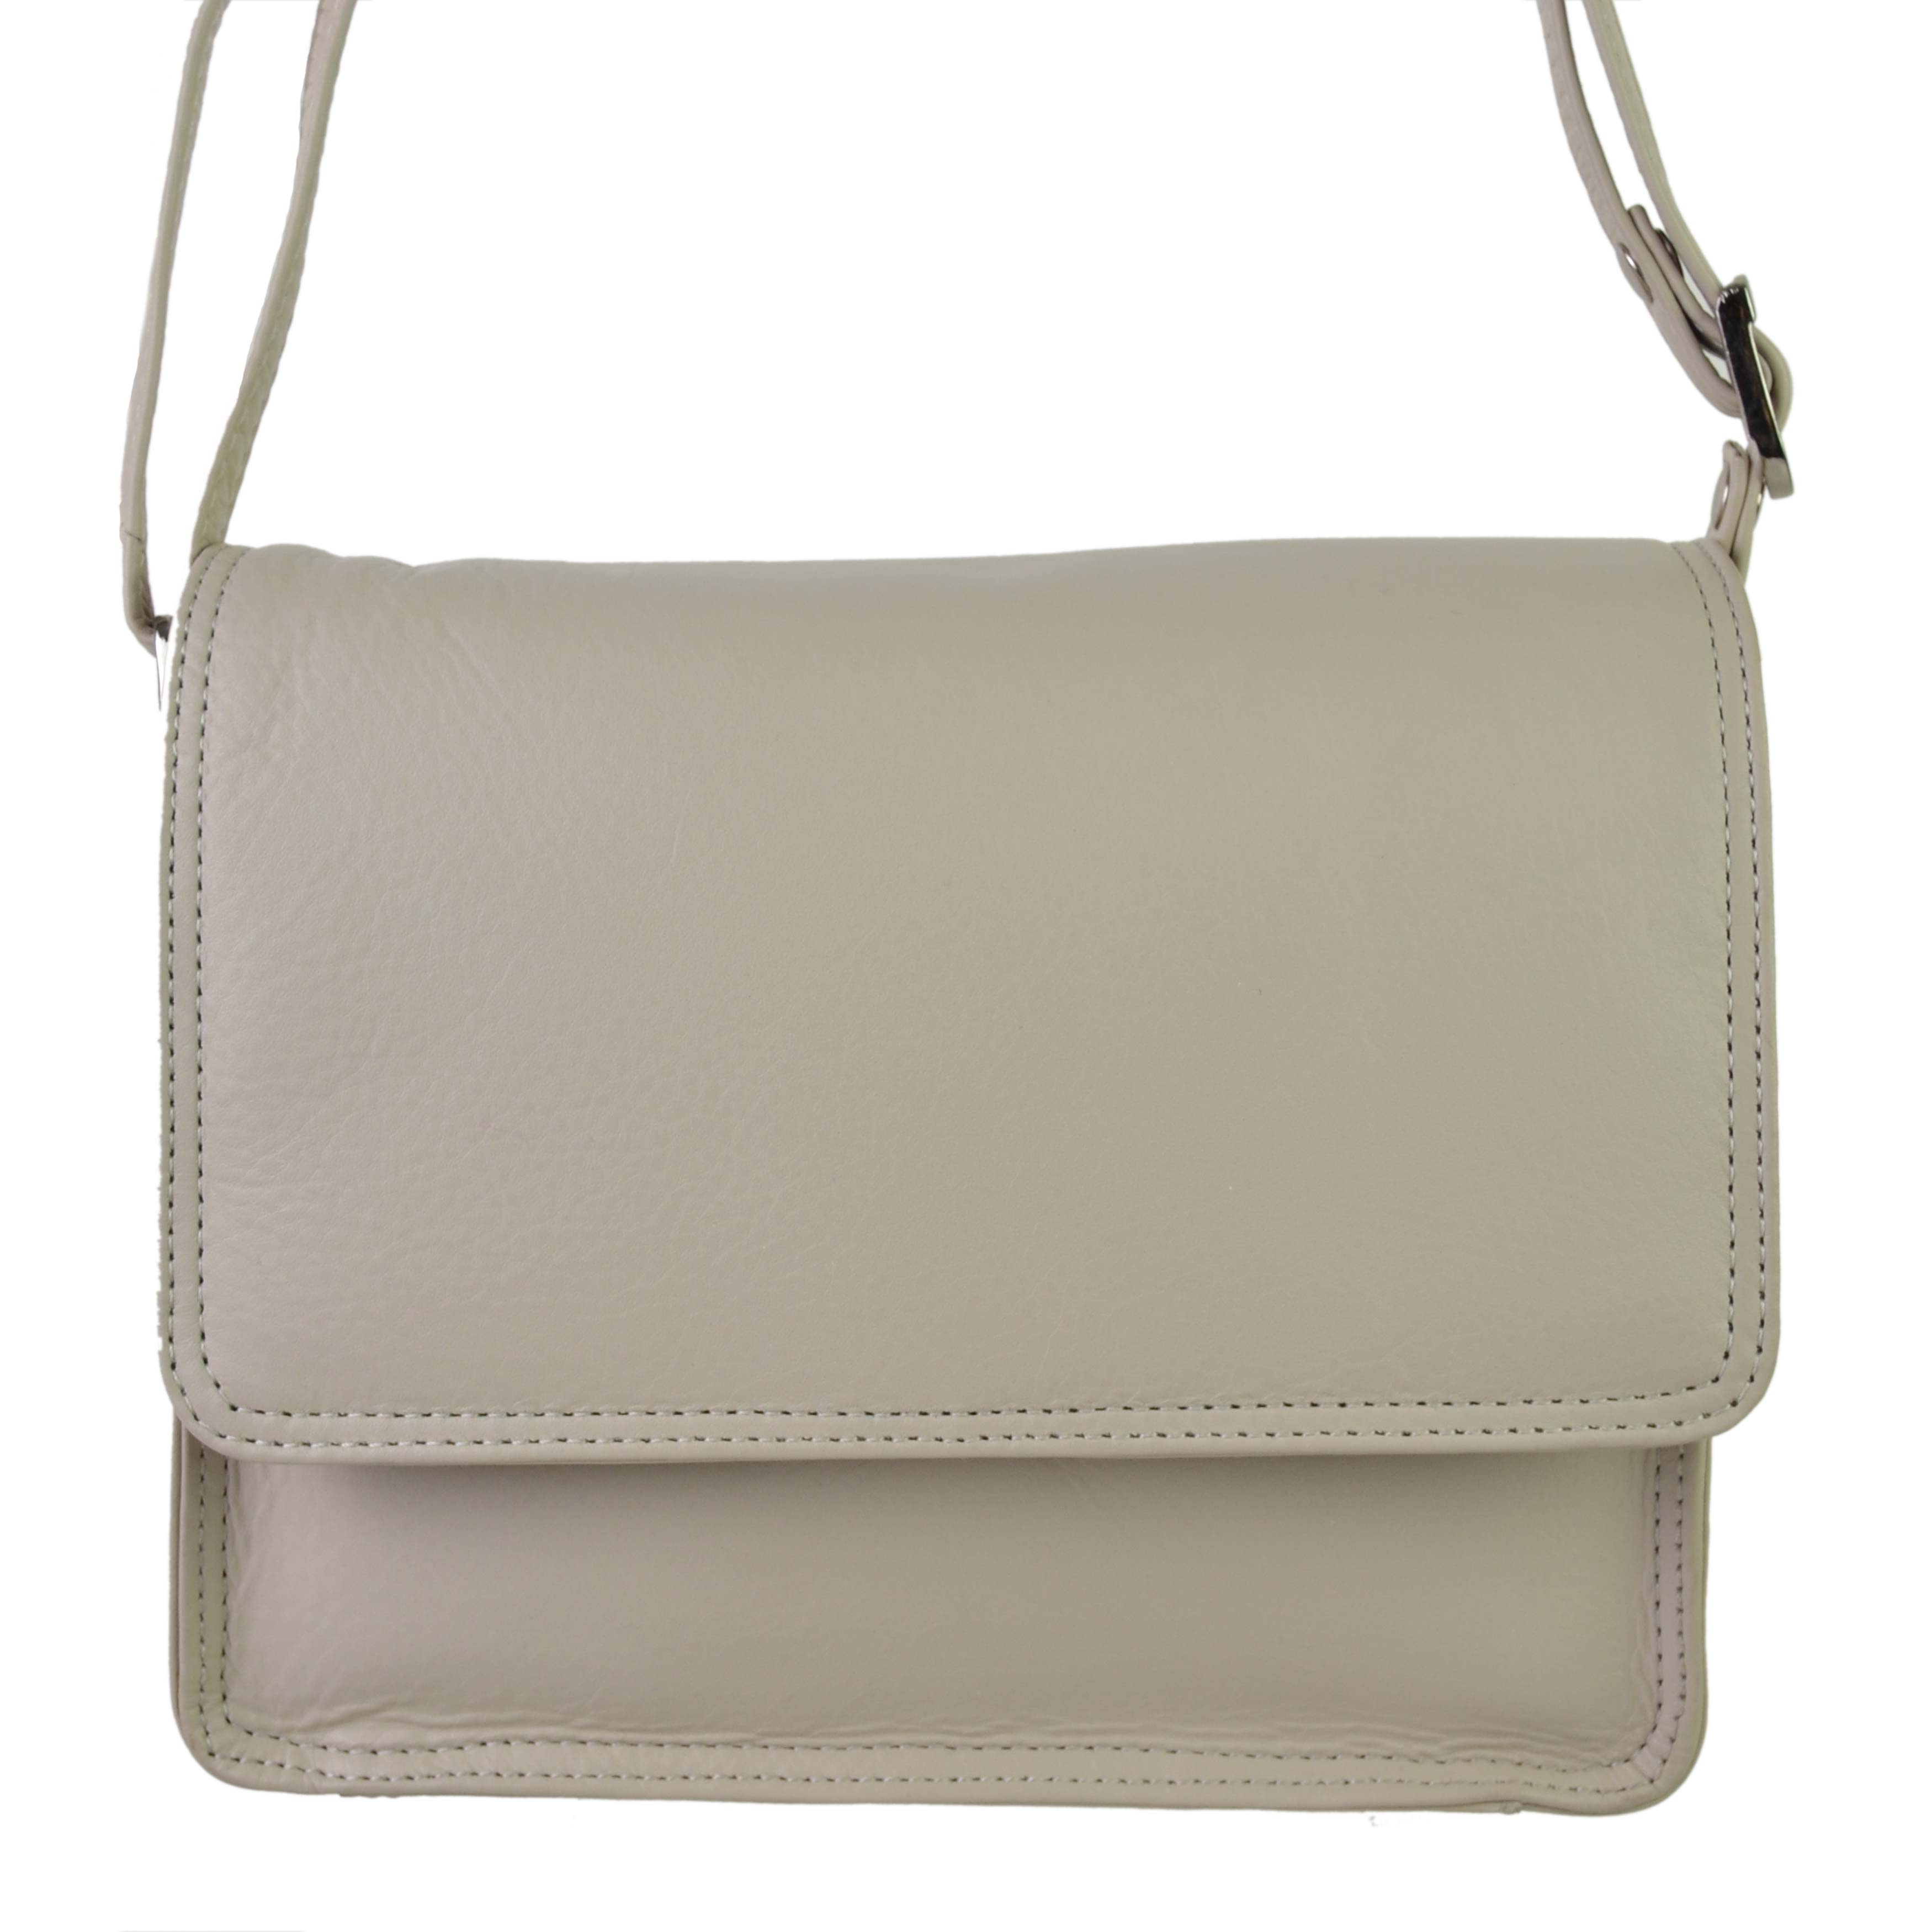 Ladies Classic Small Leather Handbag Shoulder Bag by Sirco Leatherwares ...